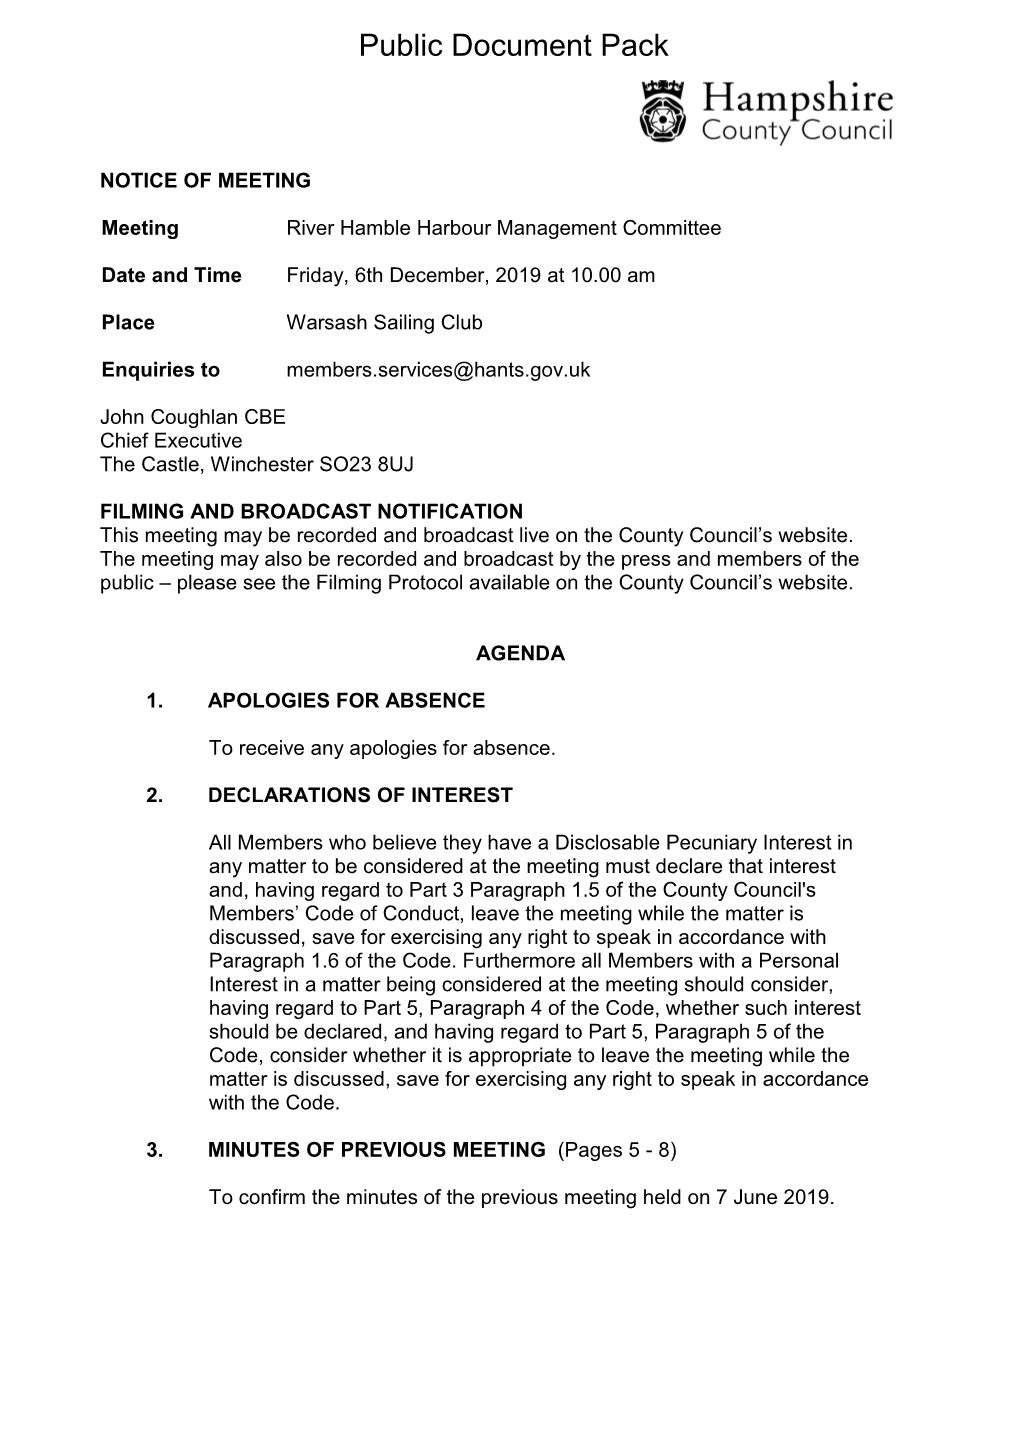 (Public Pack)Agenda Document for River Hamble Harbour